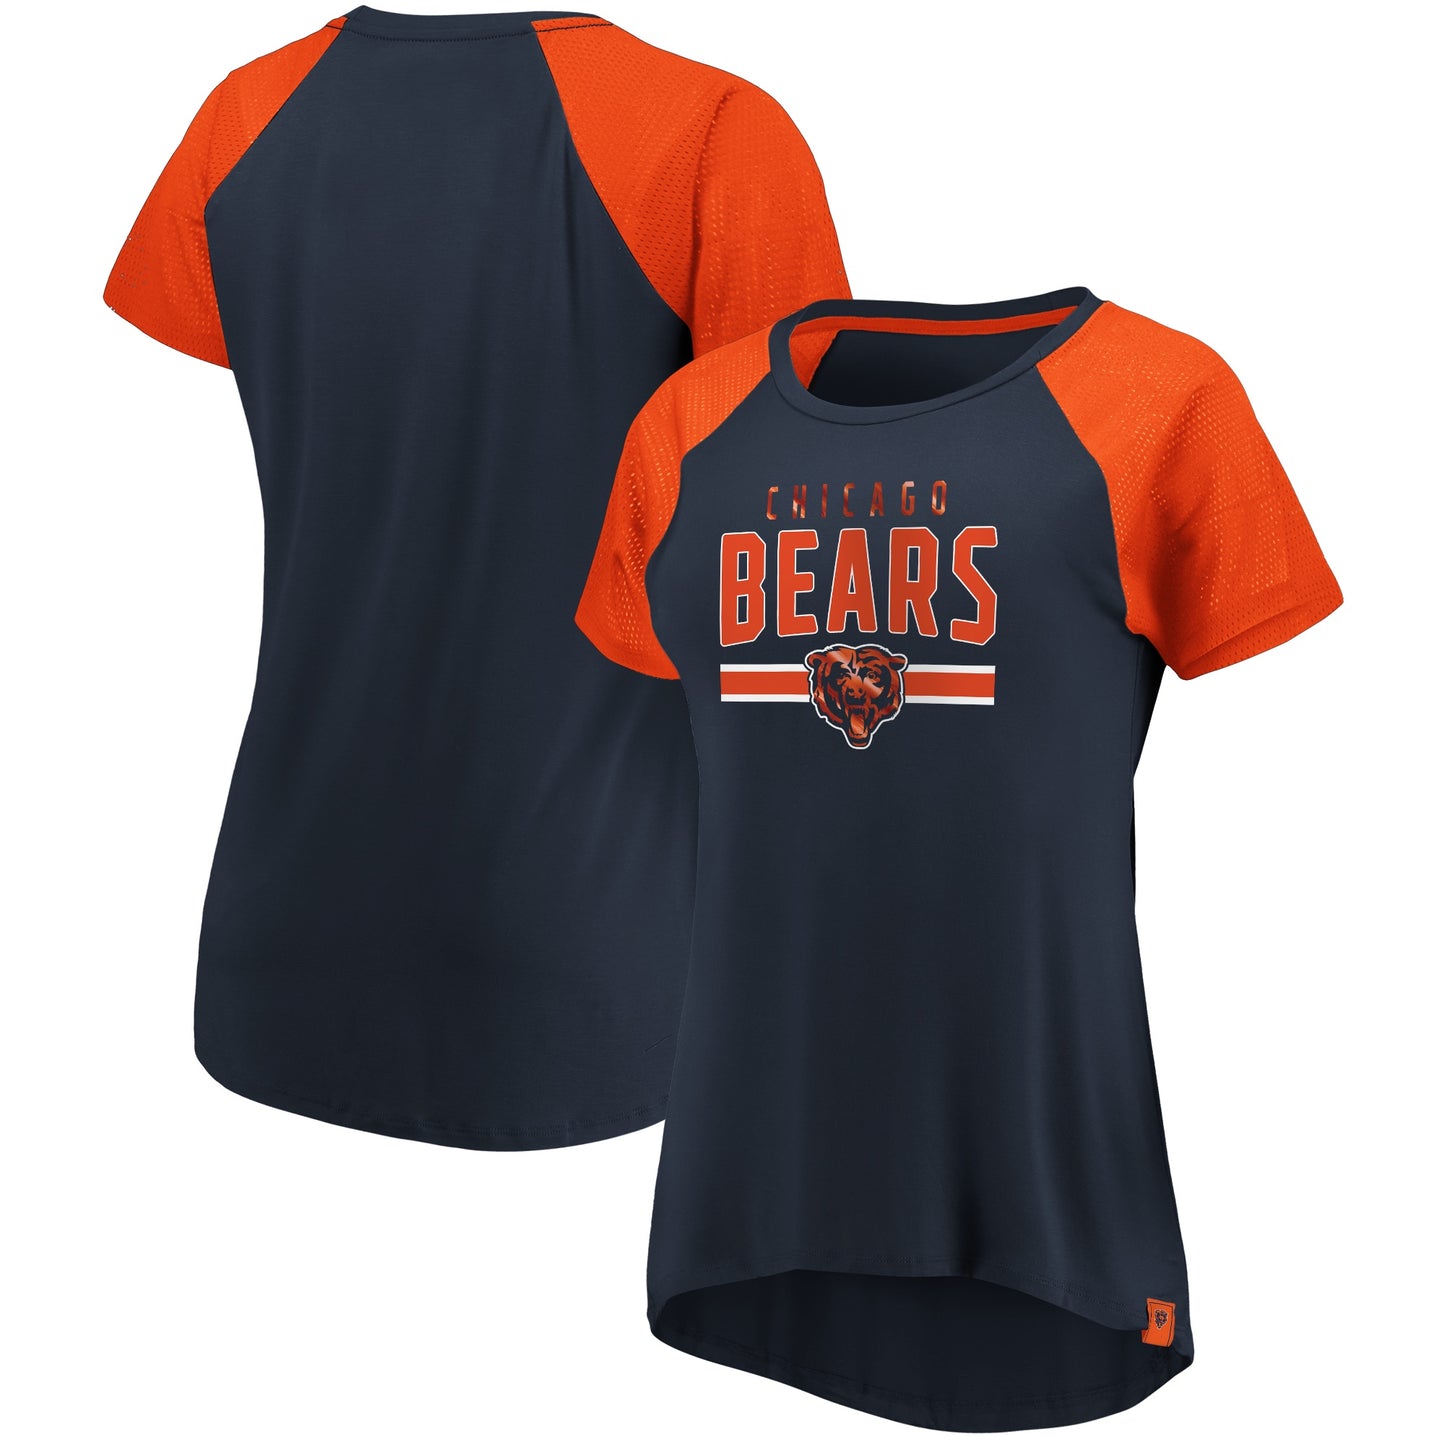 Women's Chicago Bears Fanatics Branded Navy/Orange Shining Victory T-Shirt